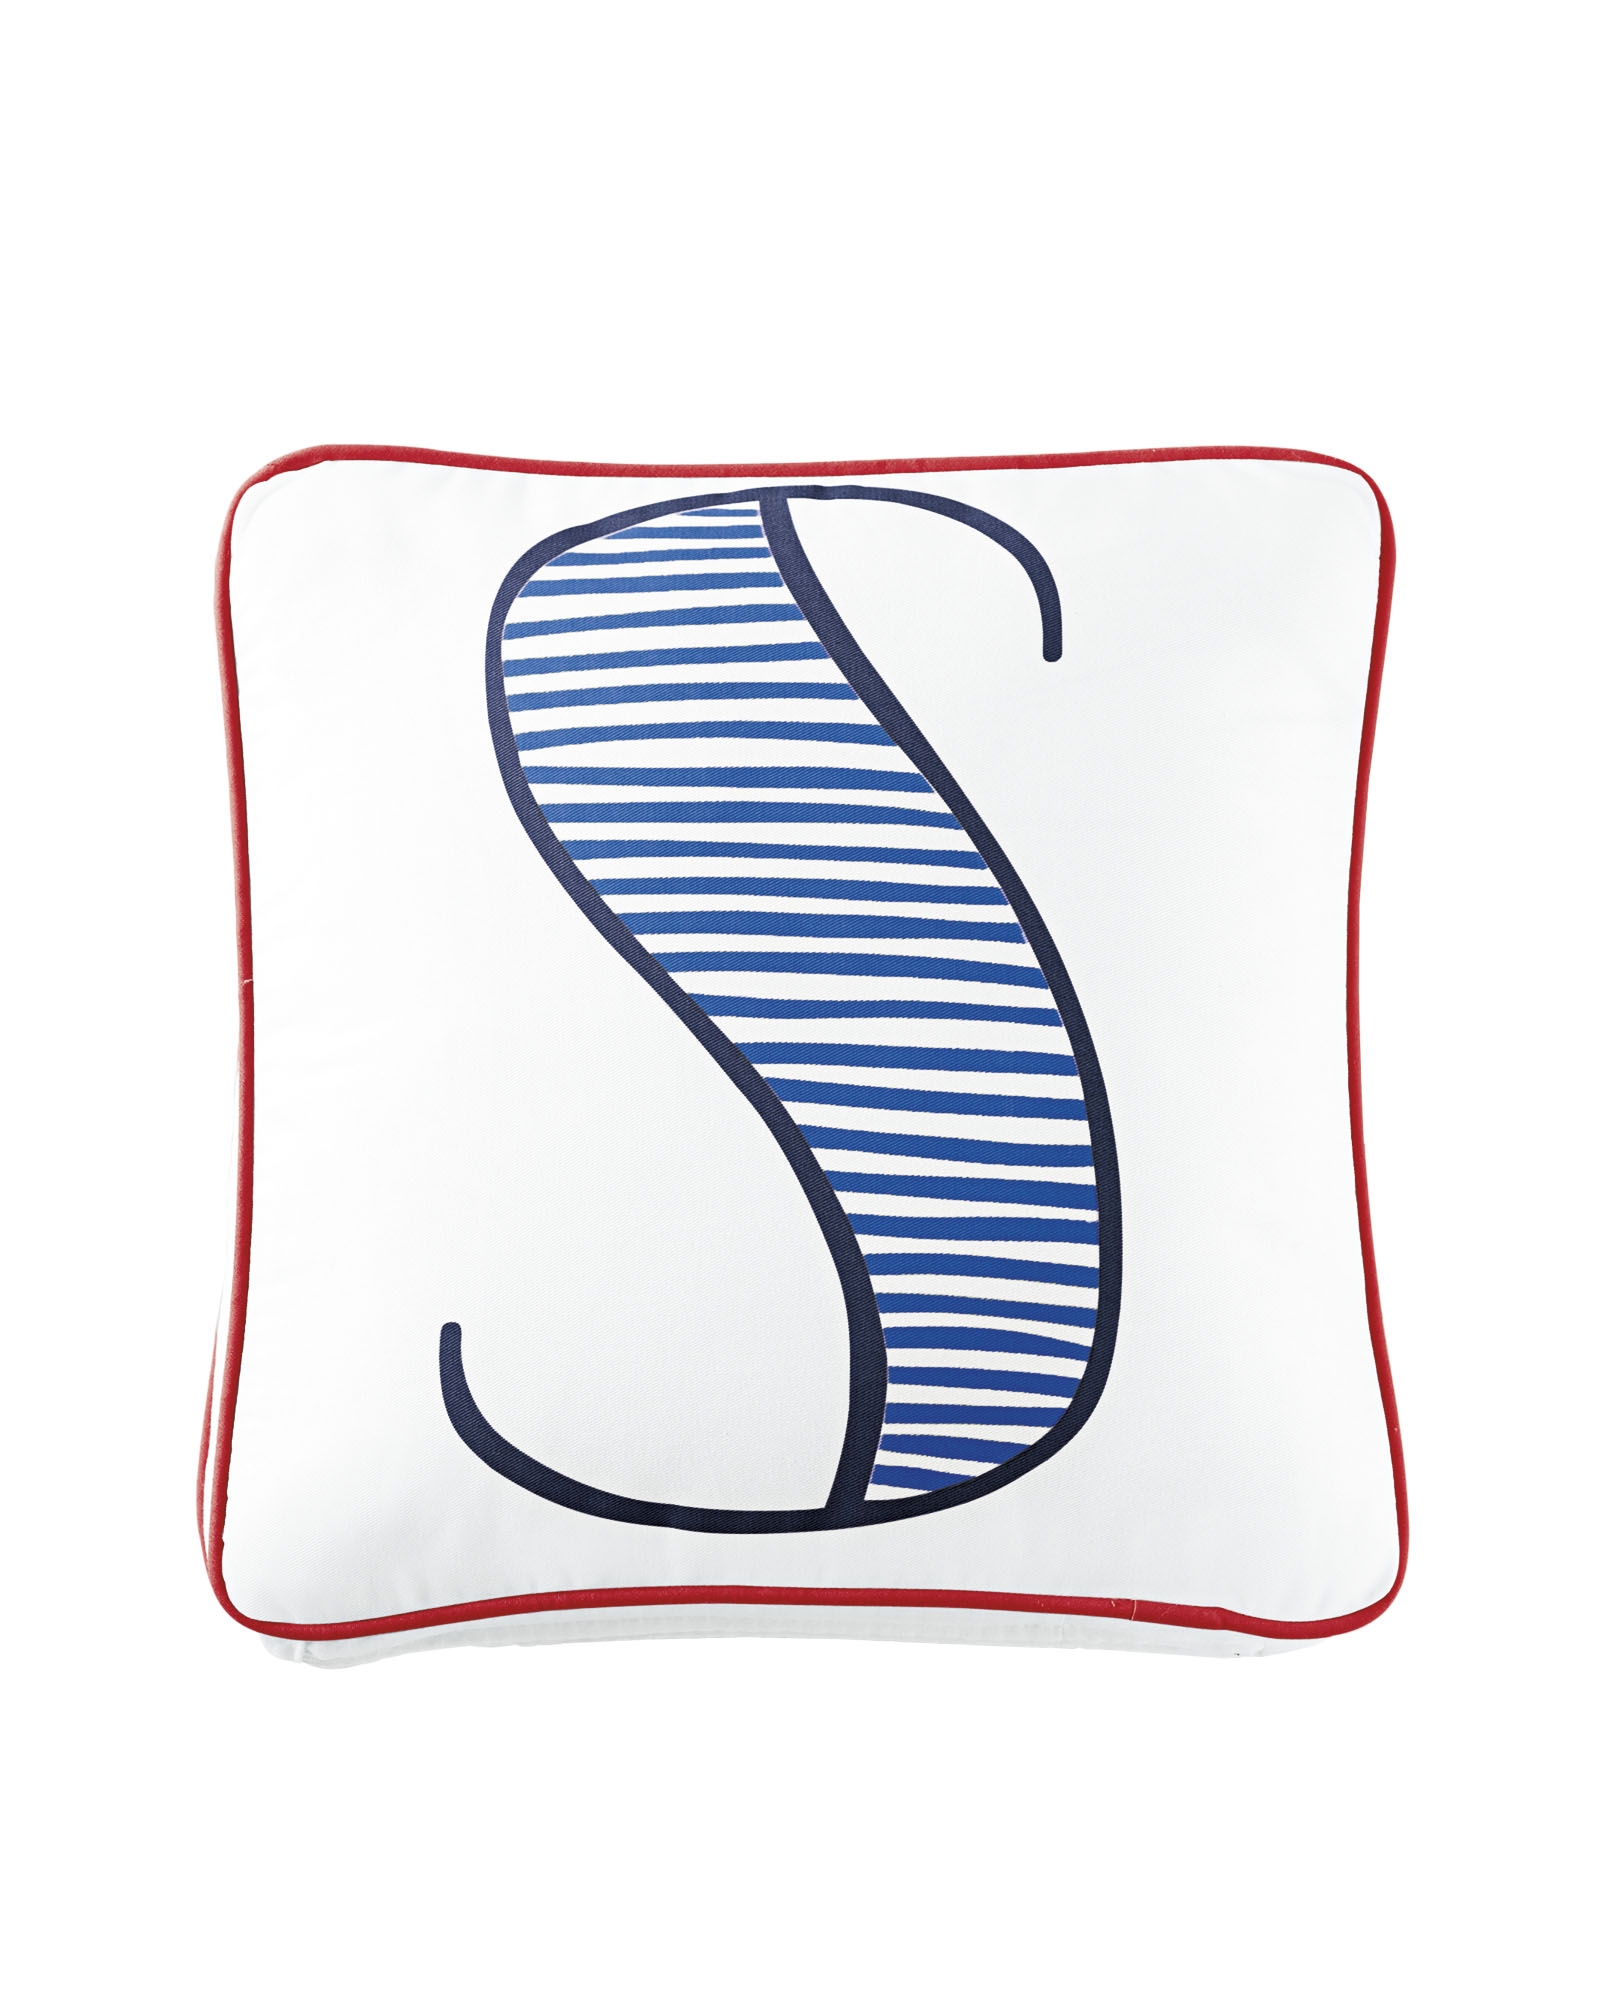 Schoolhouse Letter Pillow "B" - Cobalt/Navy - 14"SQ - PrimaLoftÂ® fill - Image 0